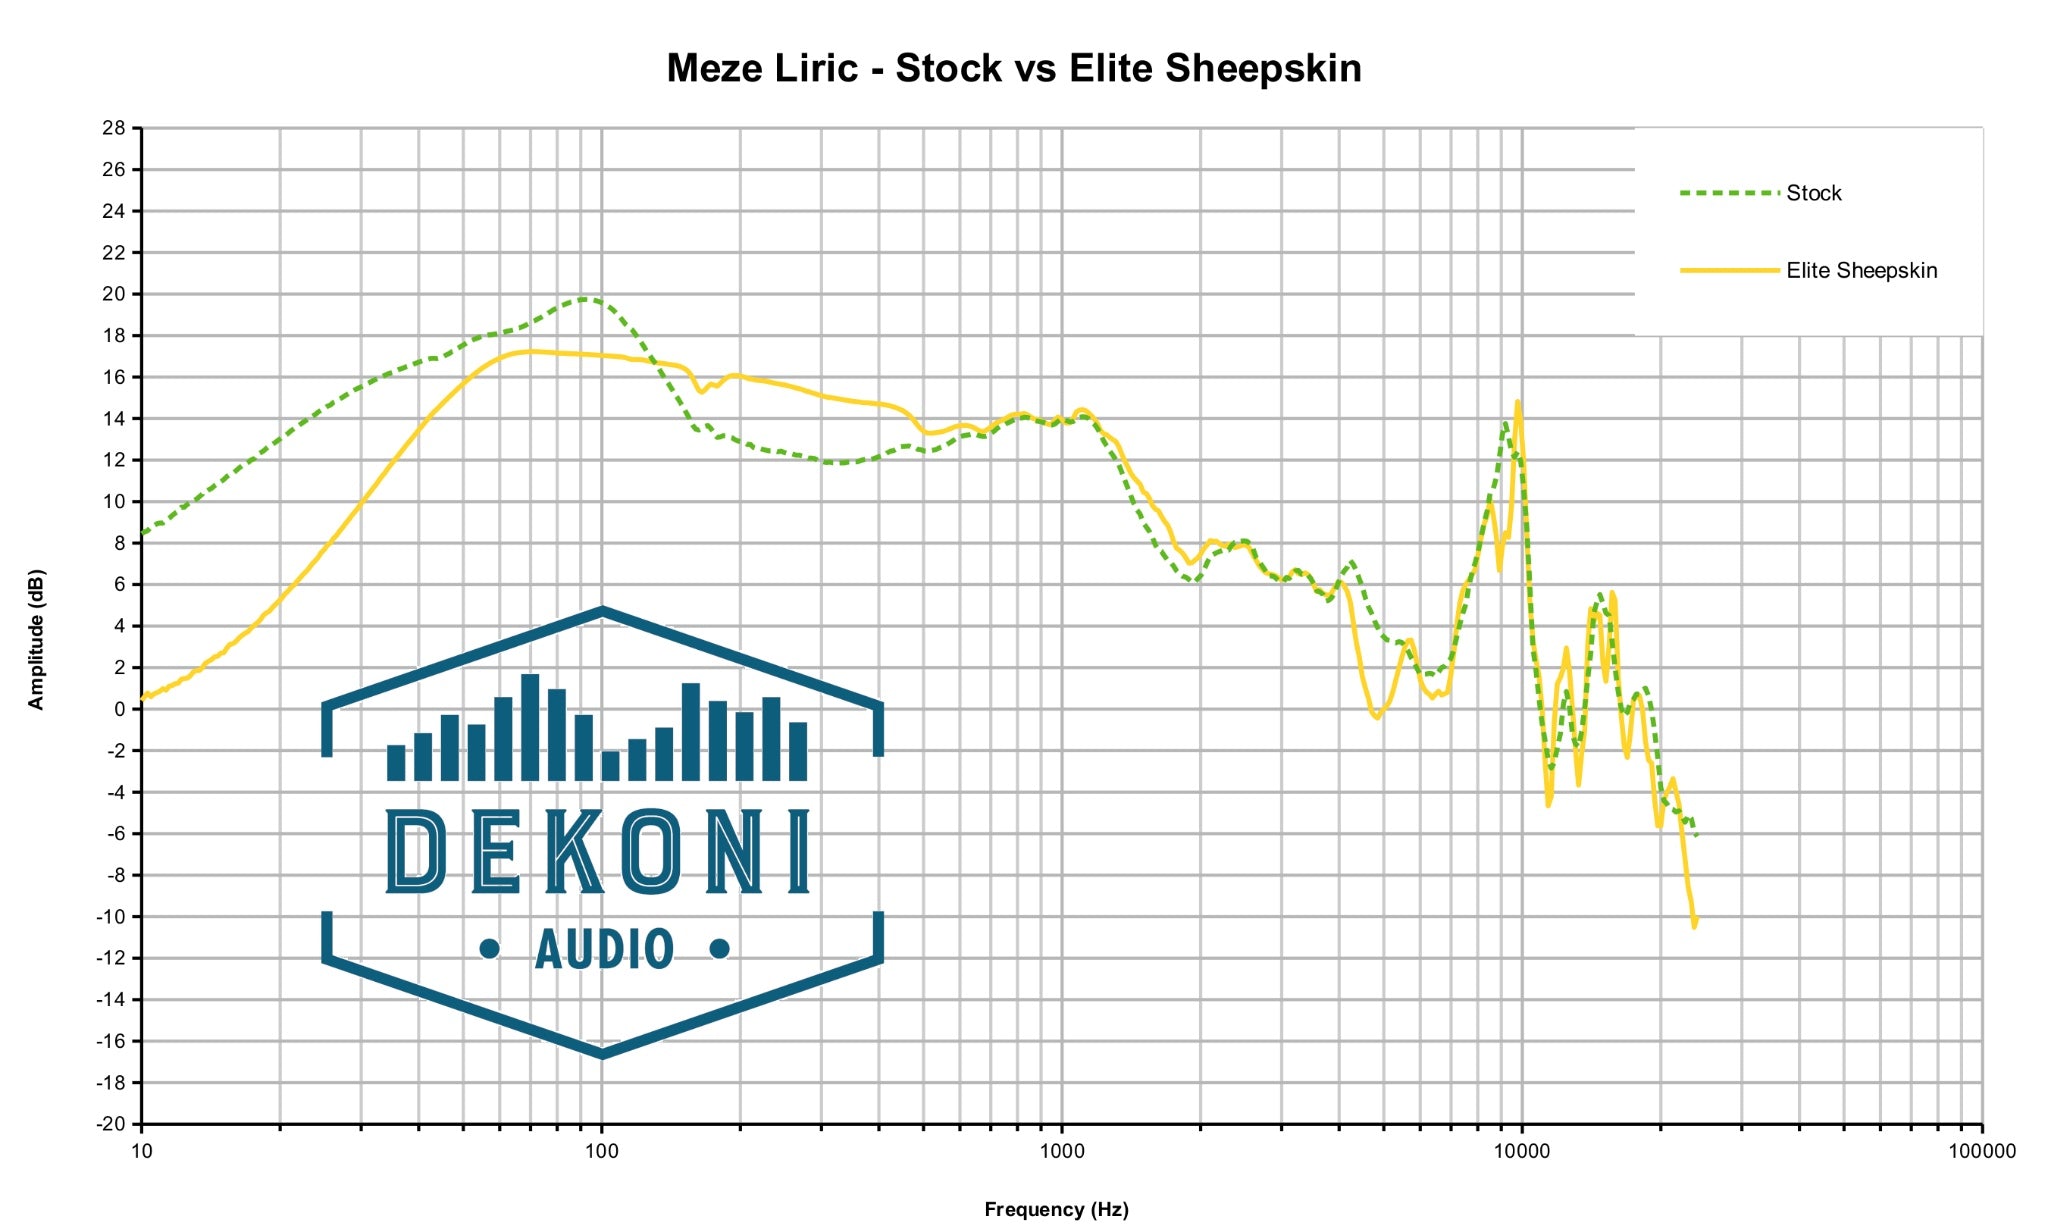 Dekoni Liric pad comparison chart with stock Meze Liric pads